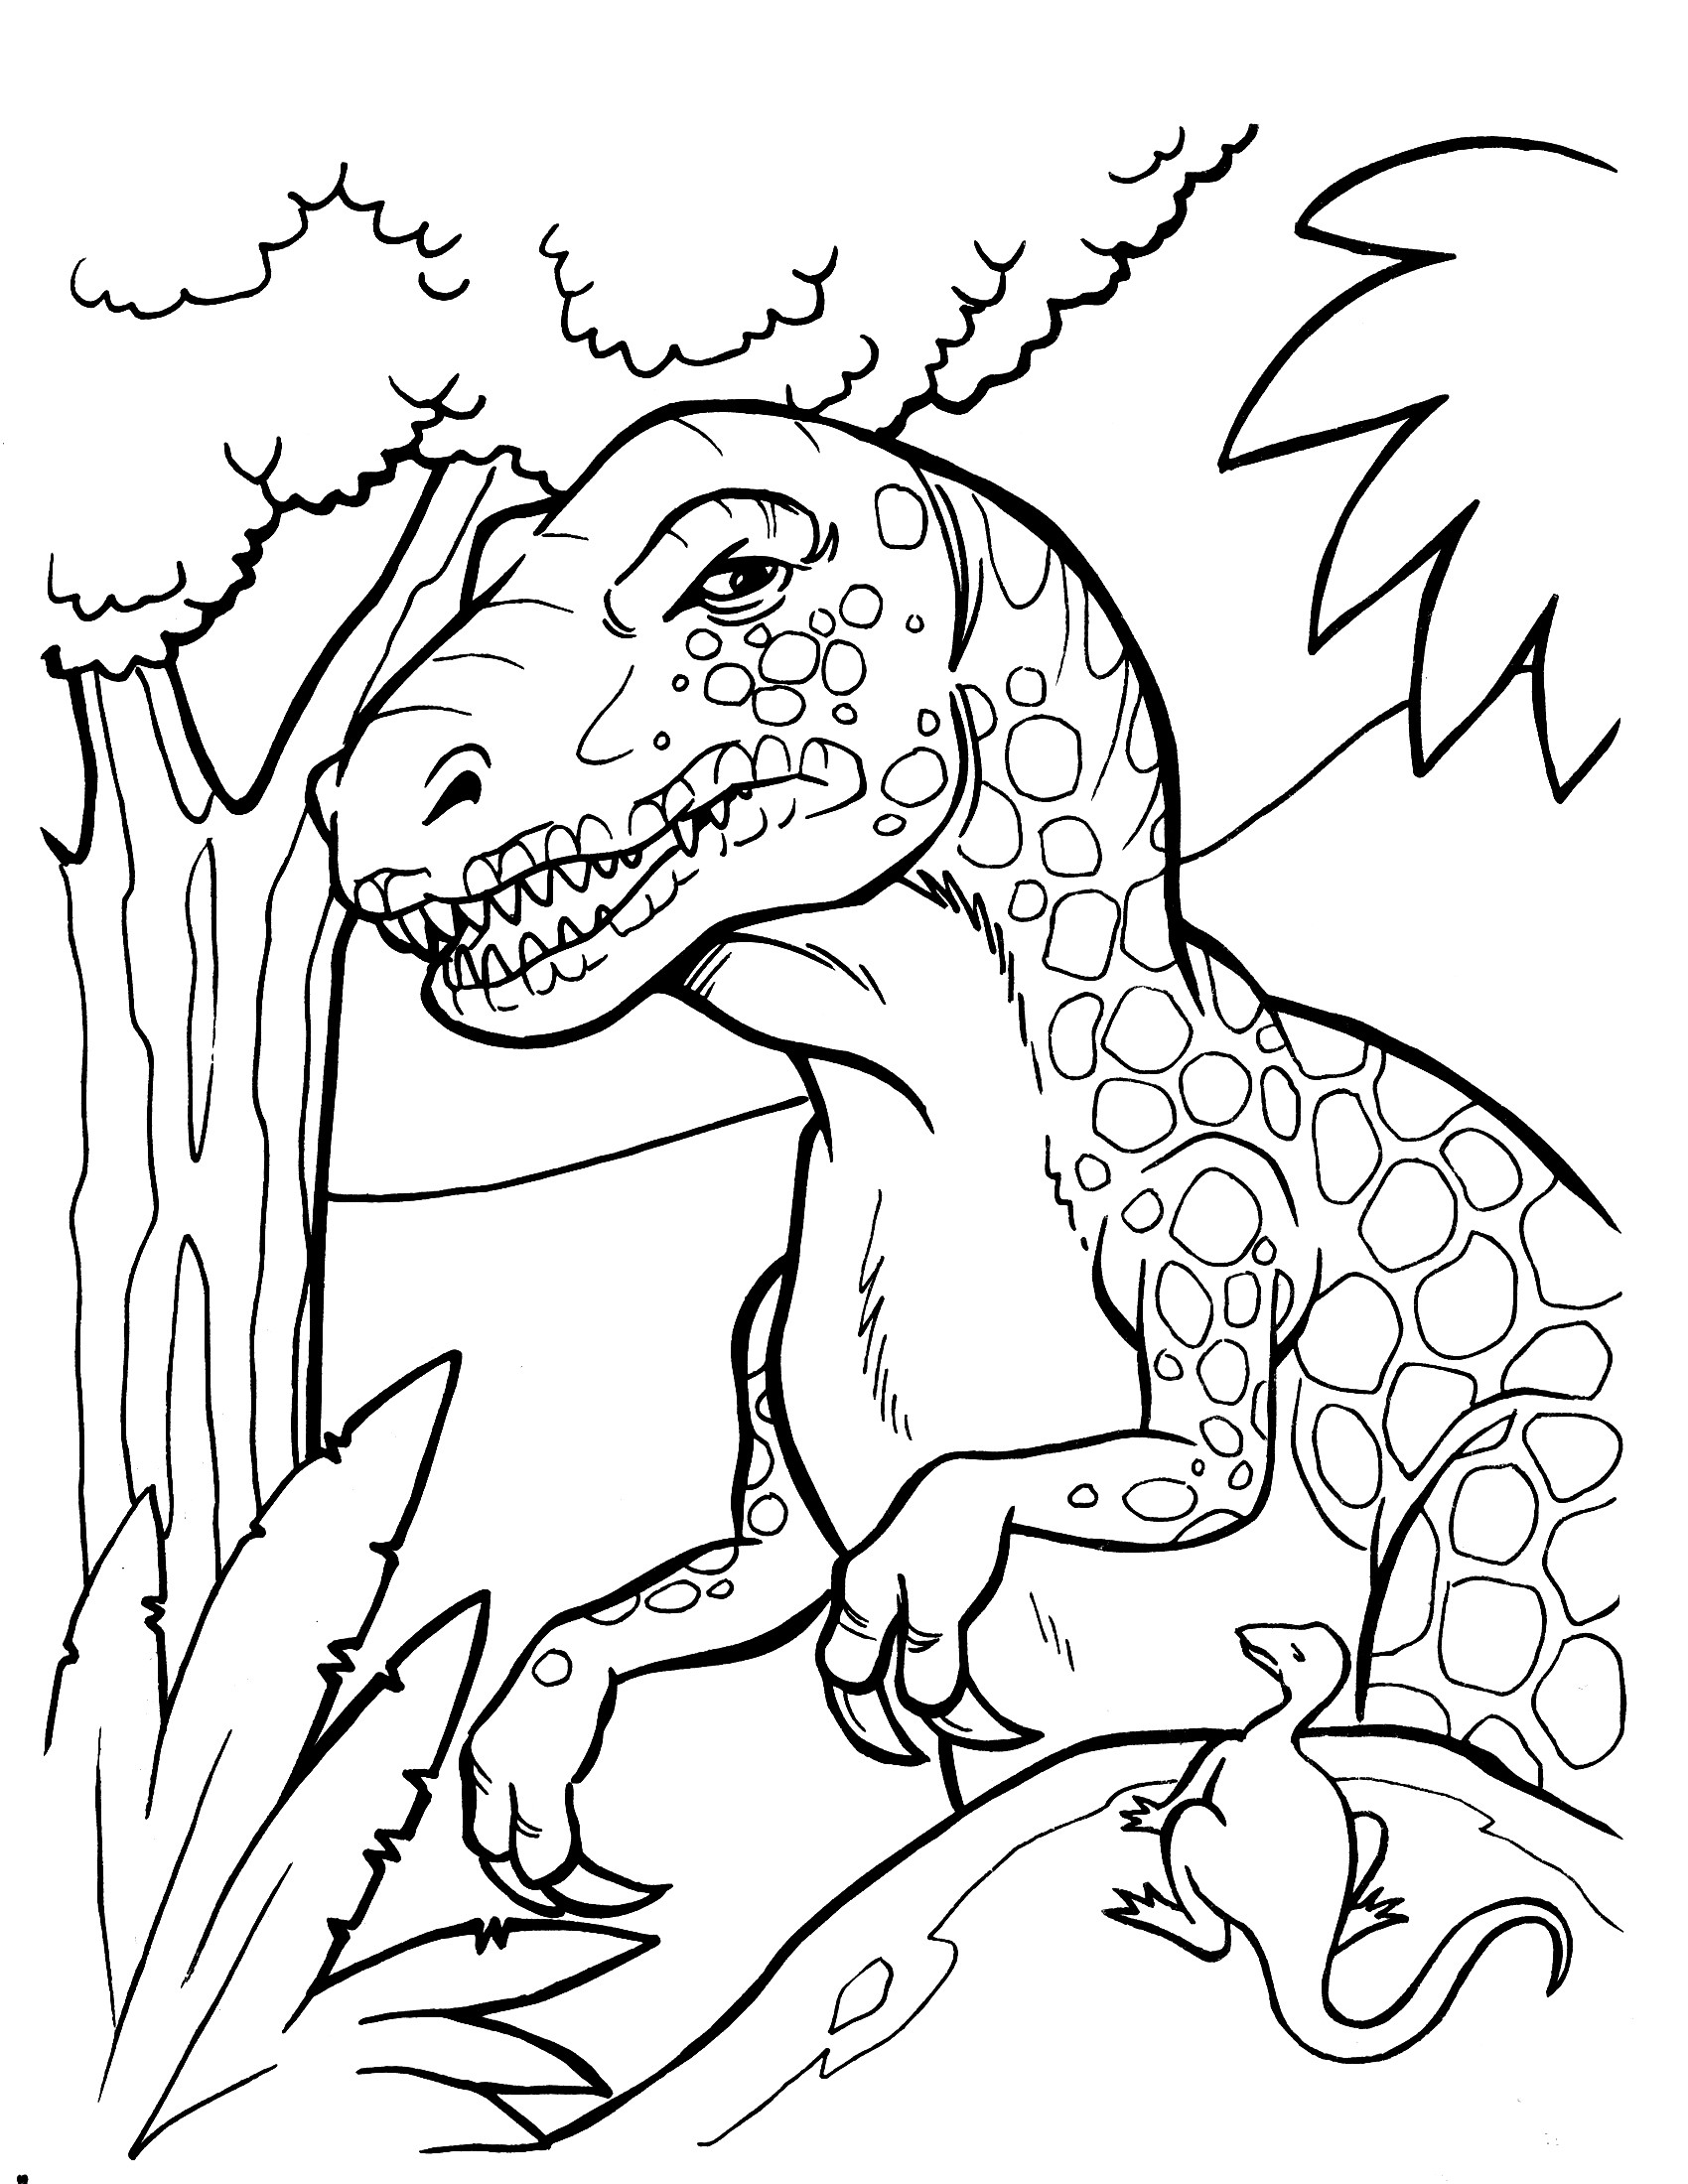 Dinosaur Coloring Sheets For Boys
 Big Dinosaur Coloring Pages